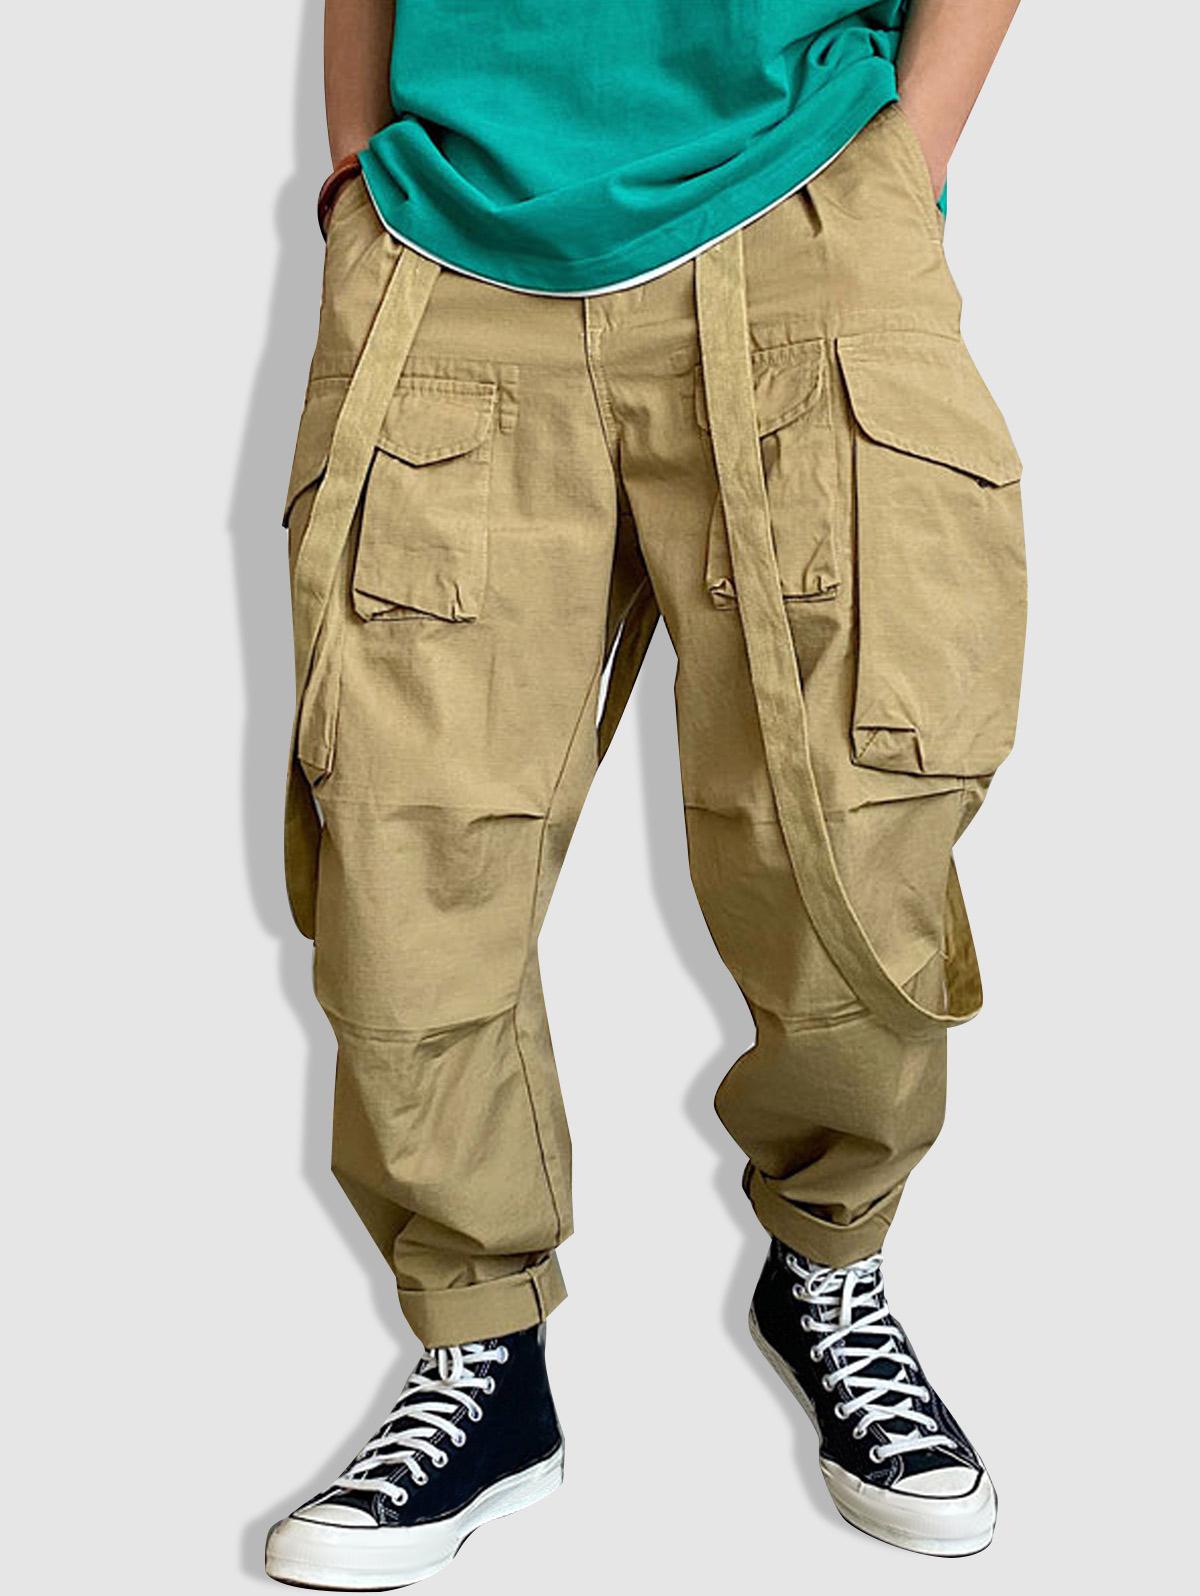 ZAFUL Men's Multi Pockets and Straps Design Streetwear Cargo Pants M Light coffee